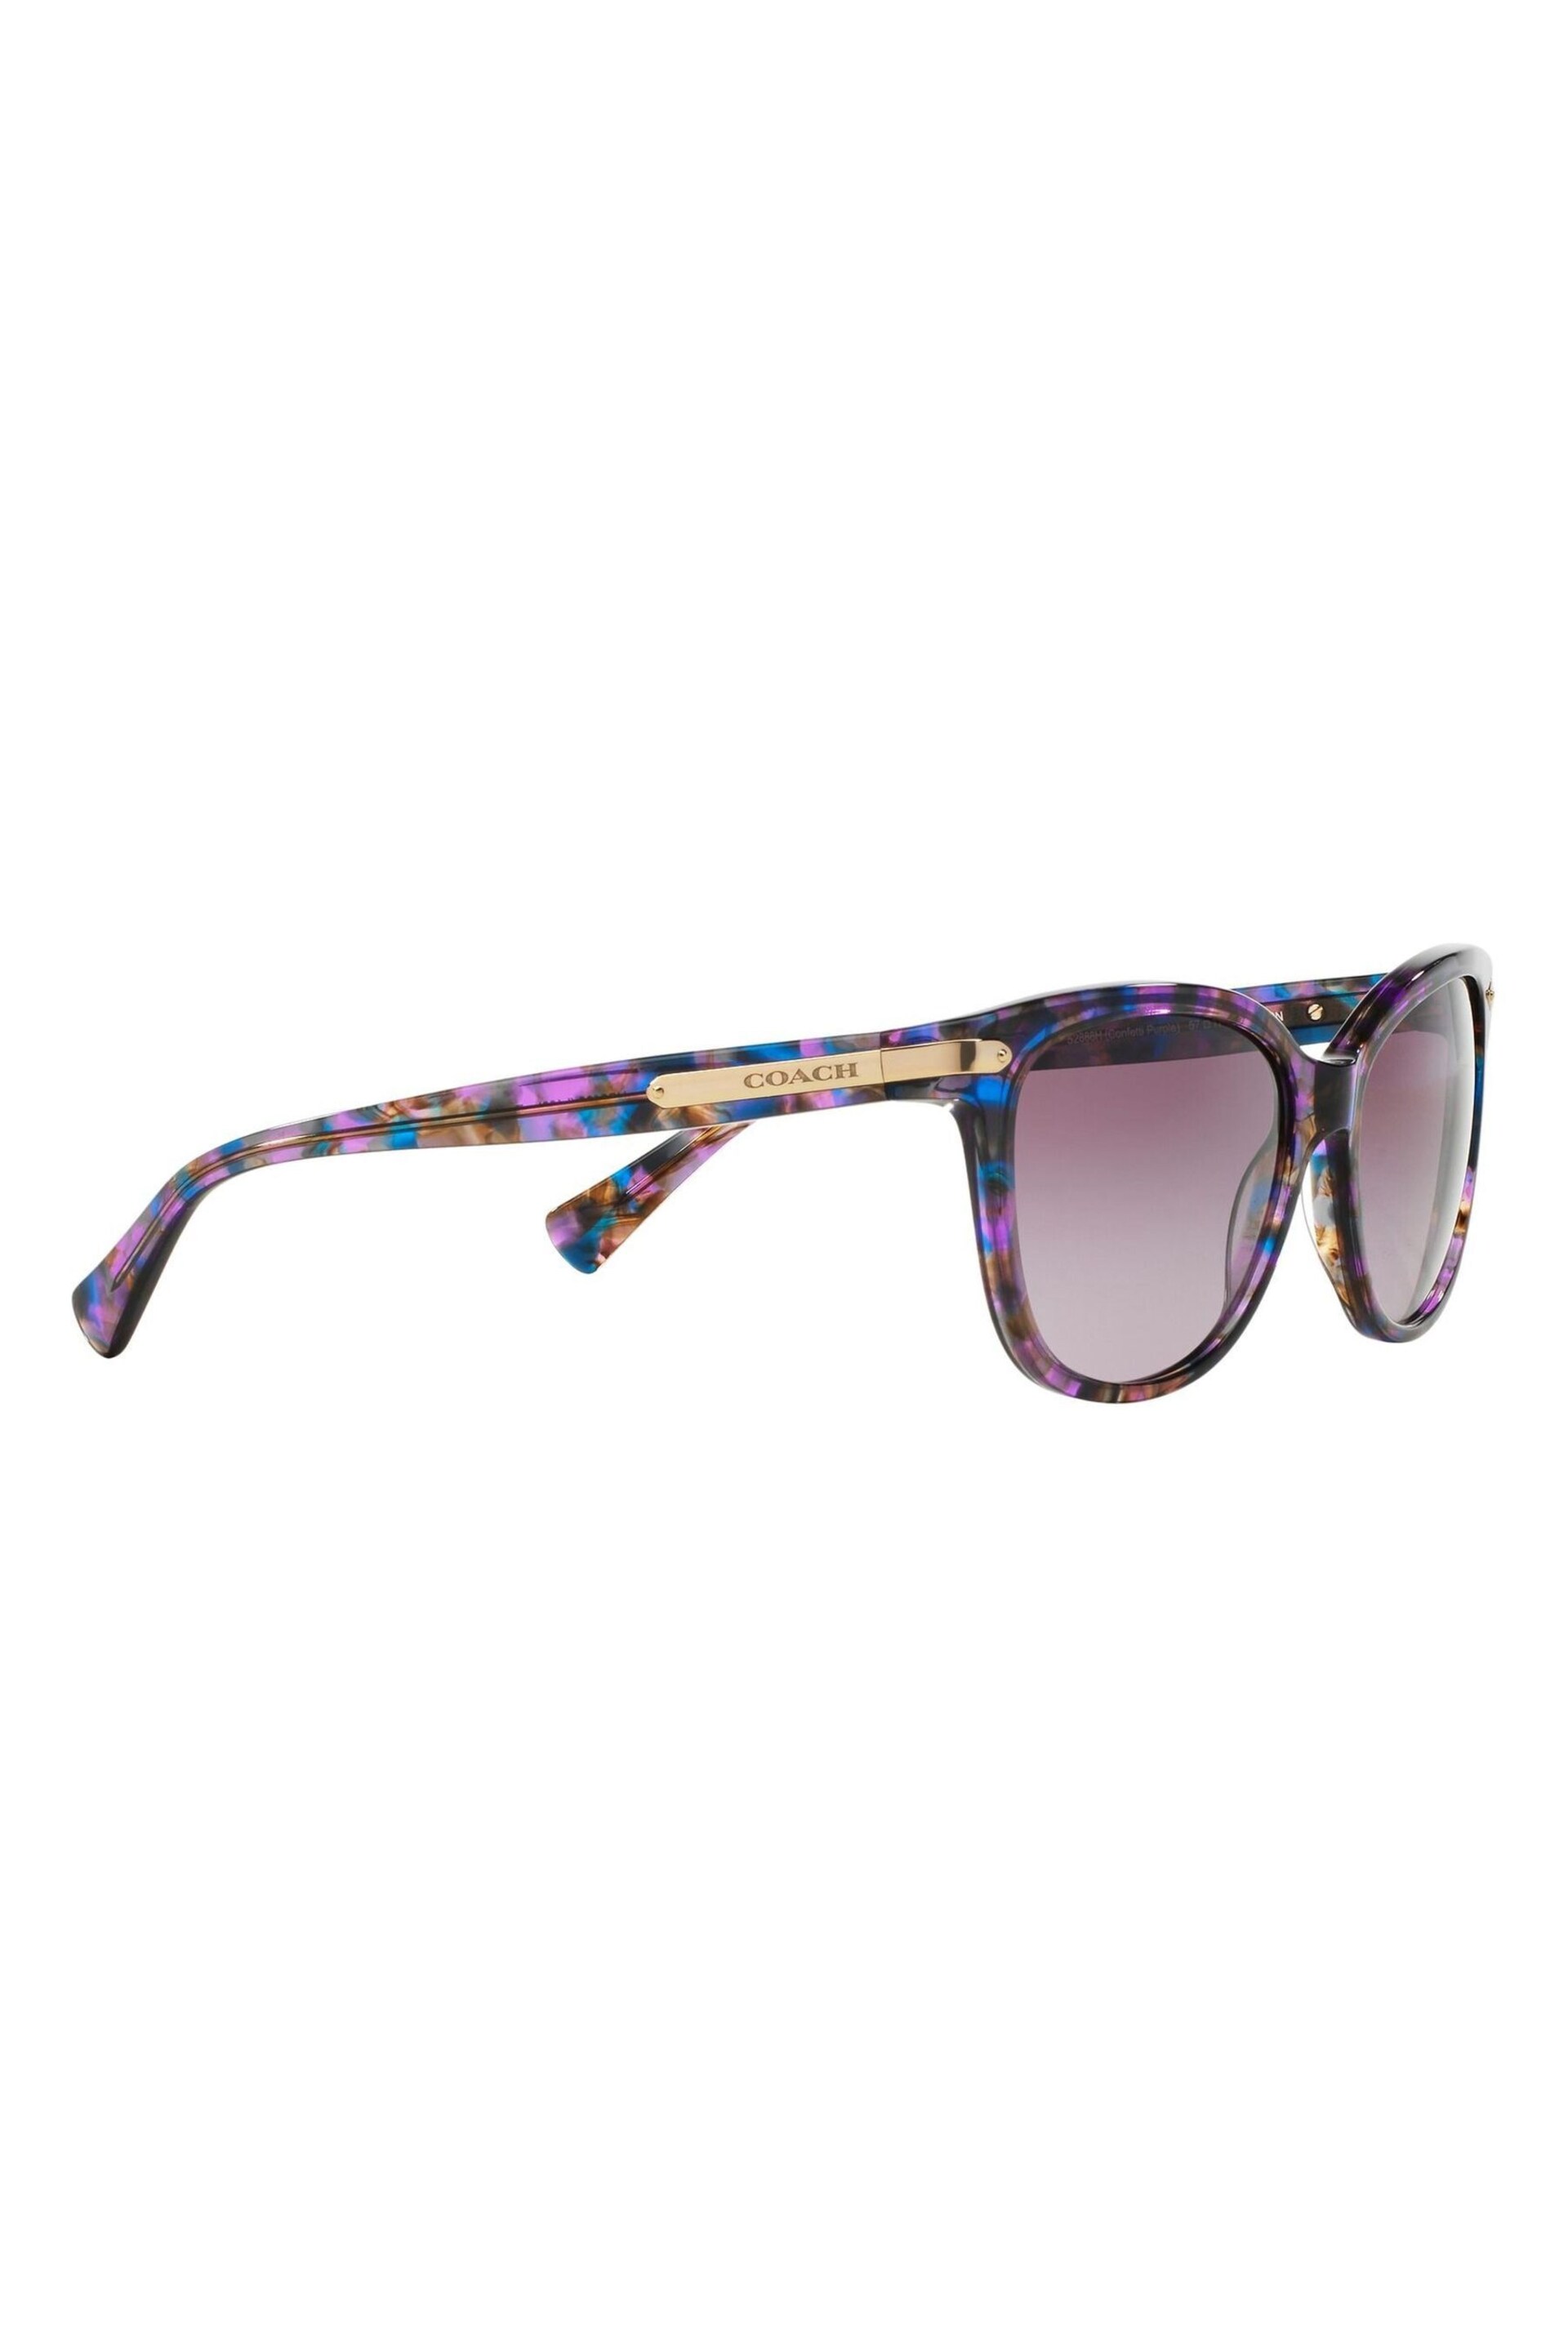 COACH Purple Sunglasses - Image 11 of 12